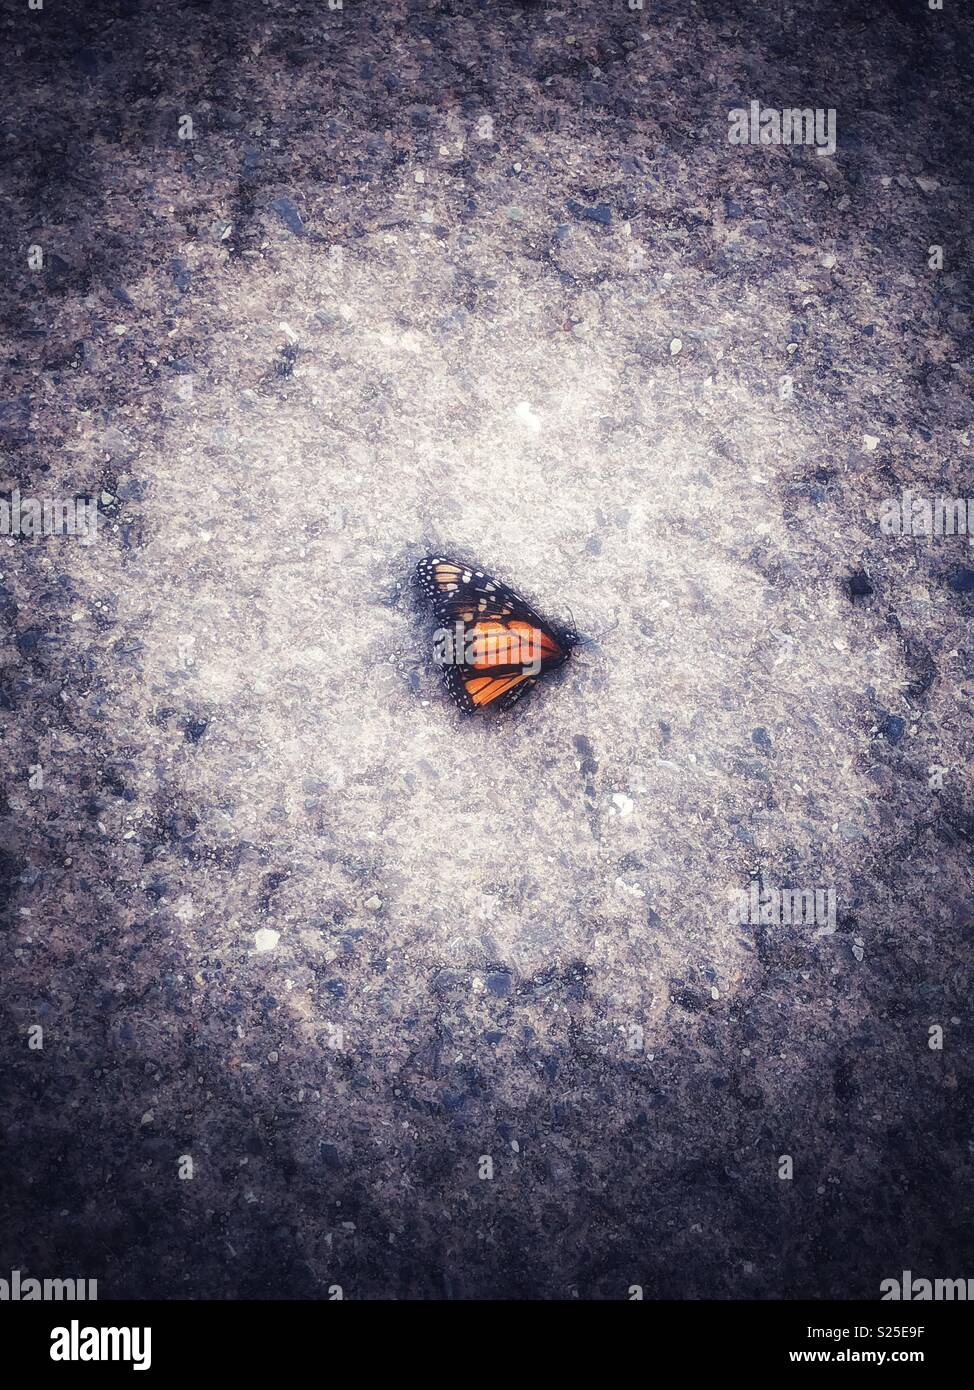 Dead monarch butterfly on footpath Stock Photo